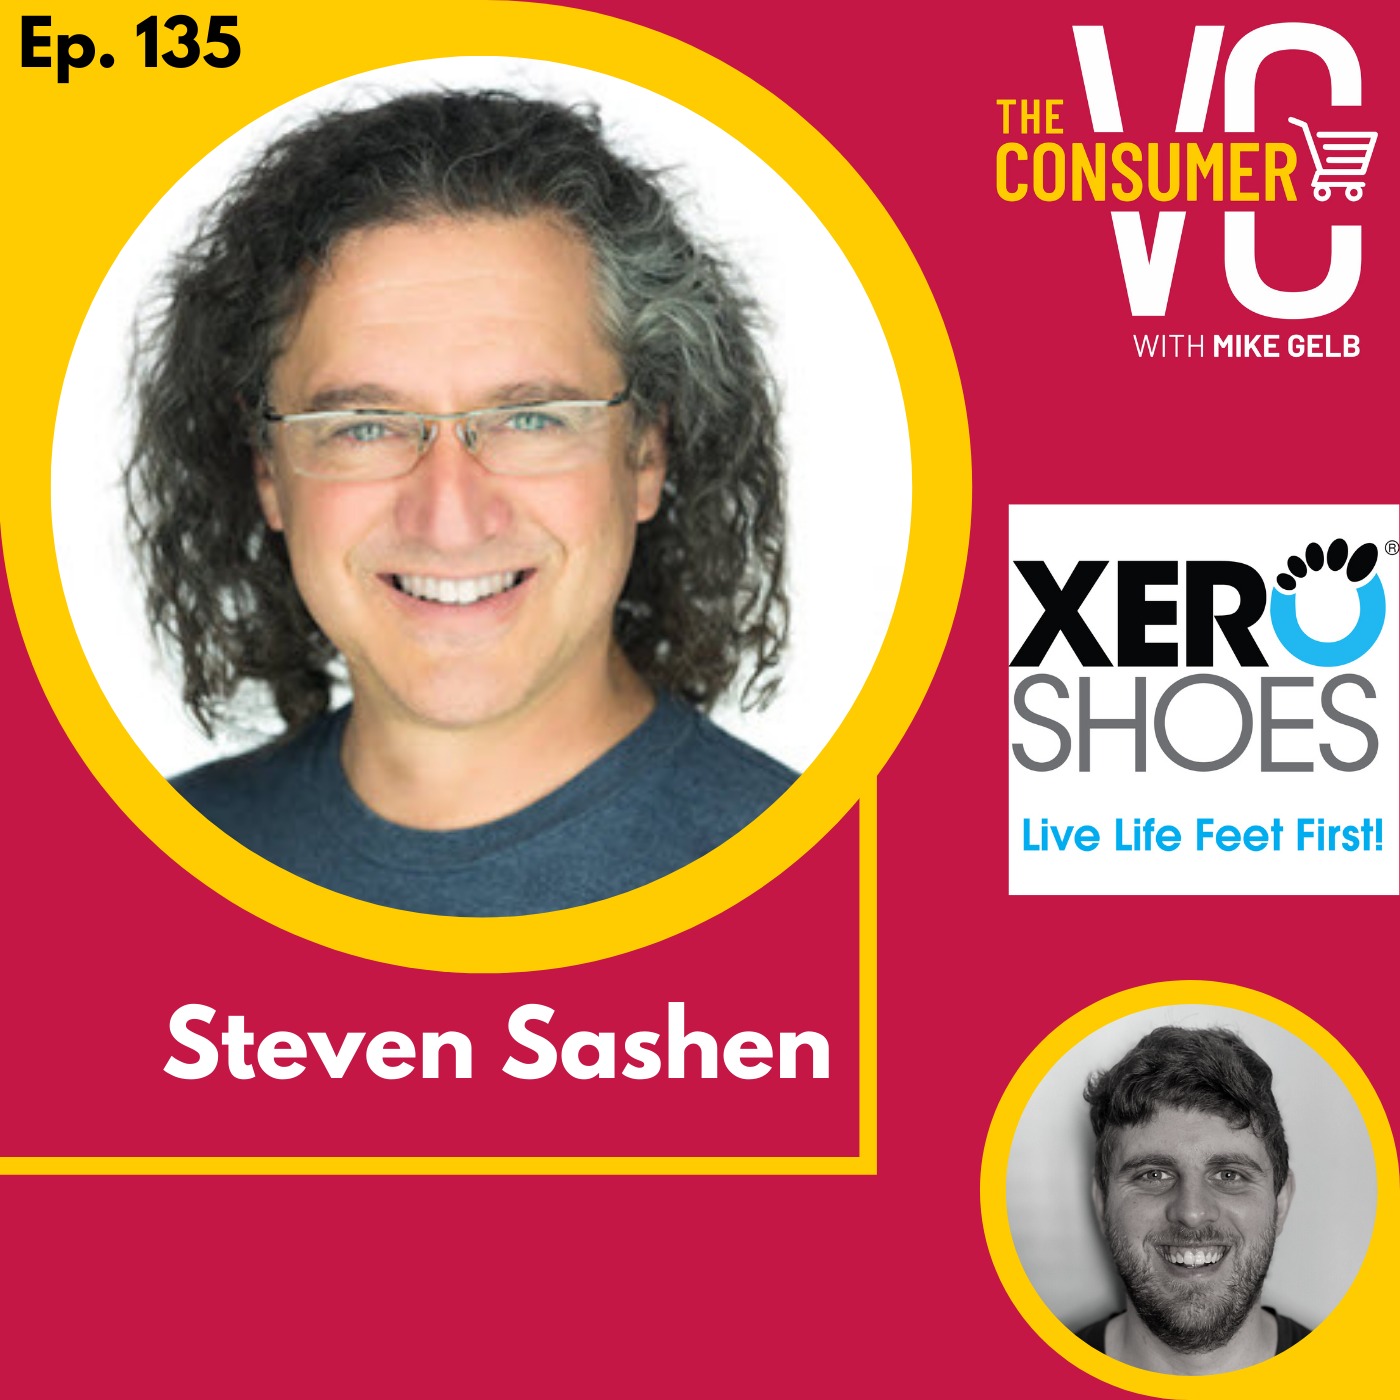 Steve Sashen (Xero Shoes) - Building the ultimate minimalist shoe